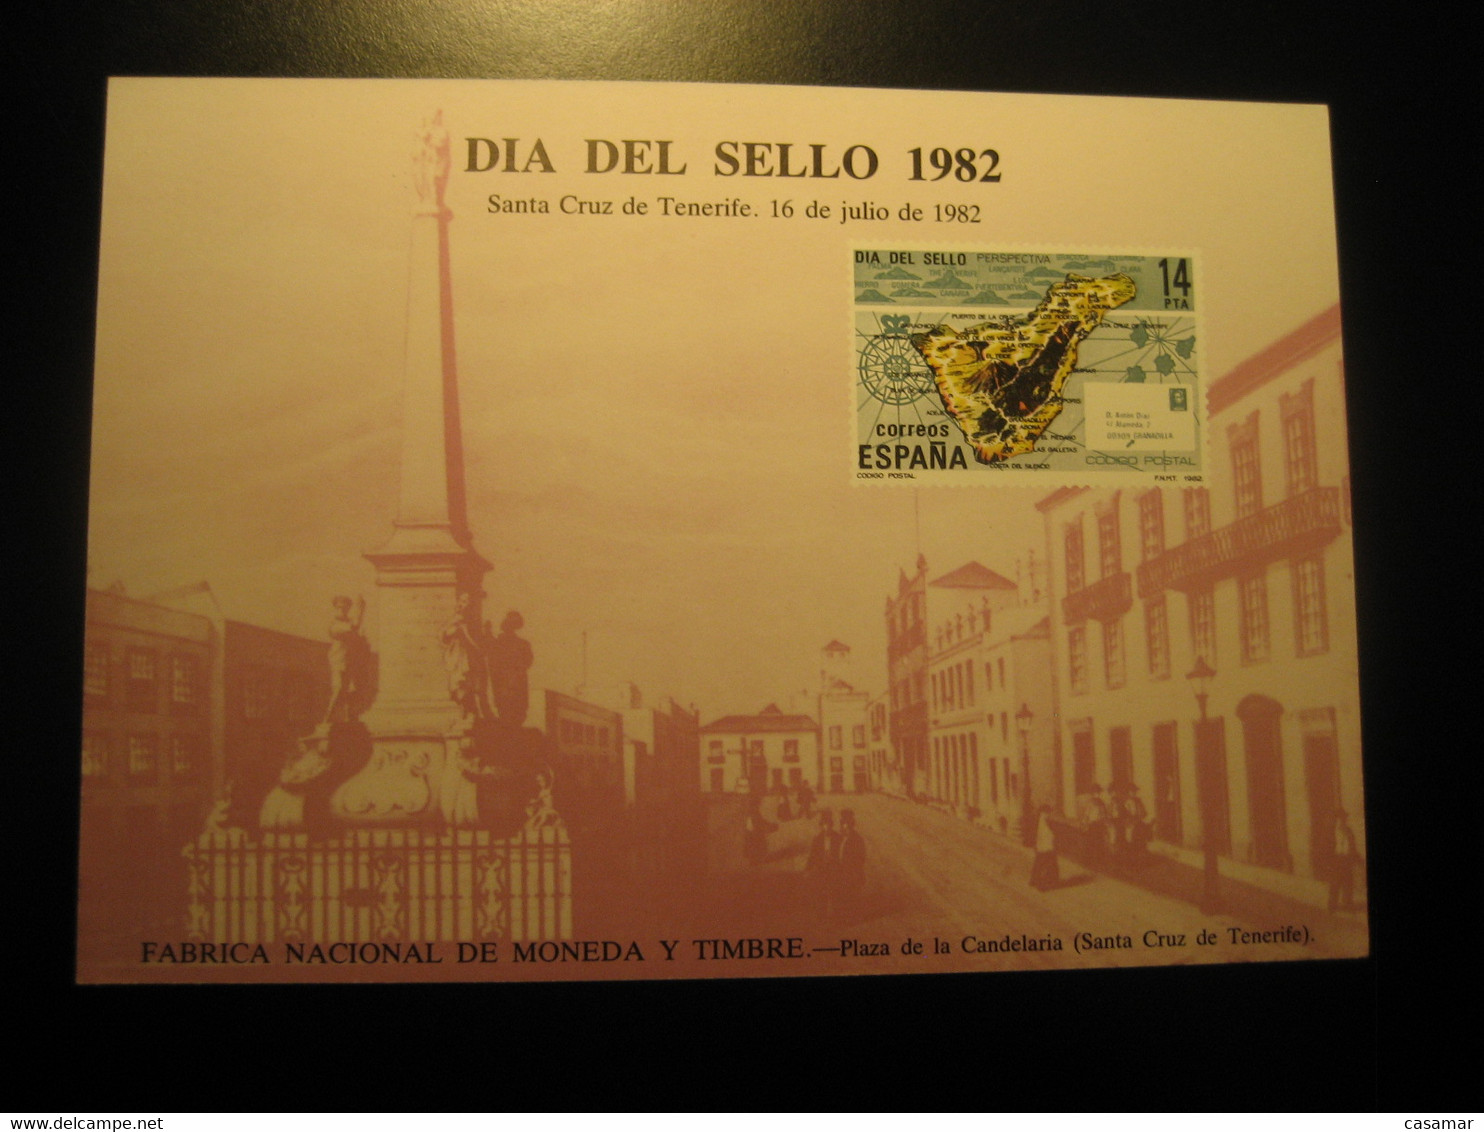 SANTA CRUZ DE TENERIFE Canarias 1982 Exfilna Plaza De La Candelaria Map Geography Big Card Proof SPAIN Document - Proofs & Reprints